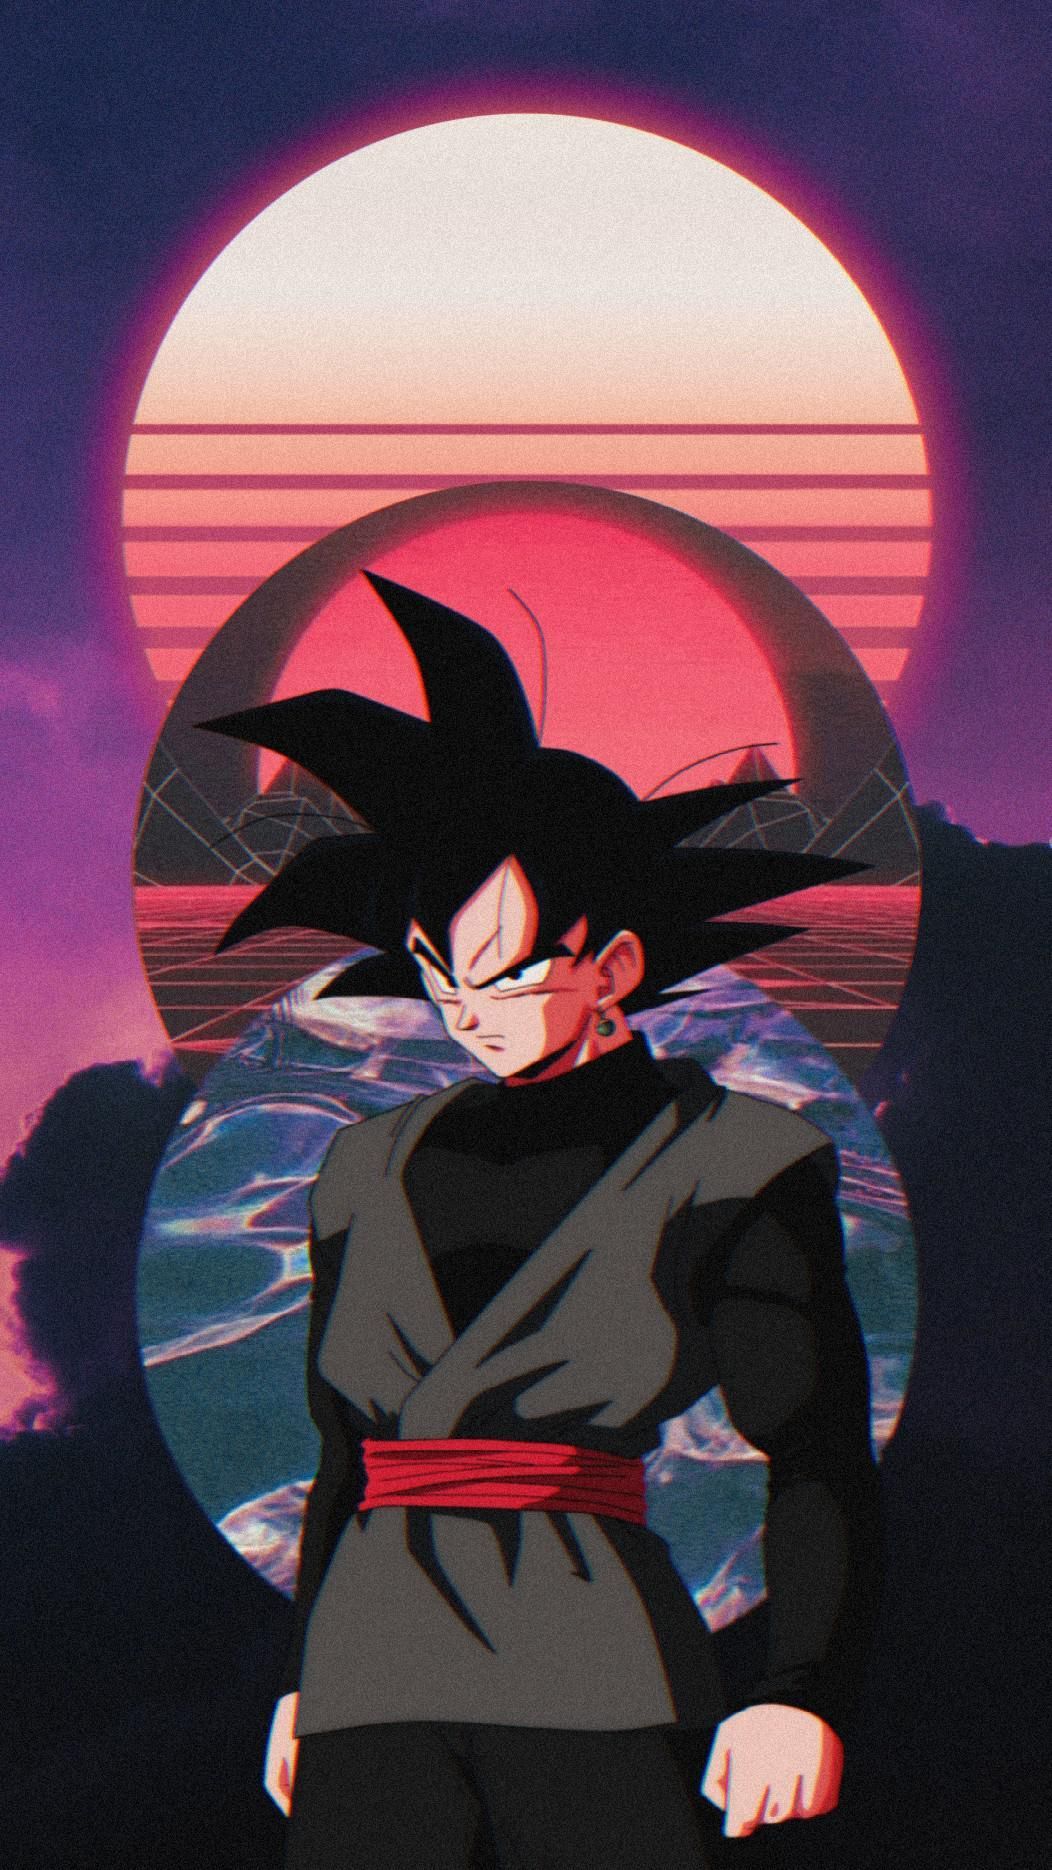 Goku black ssj rose by me : r/AnimeART